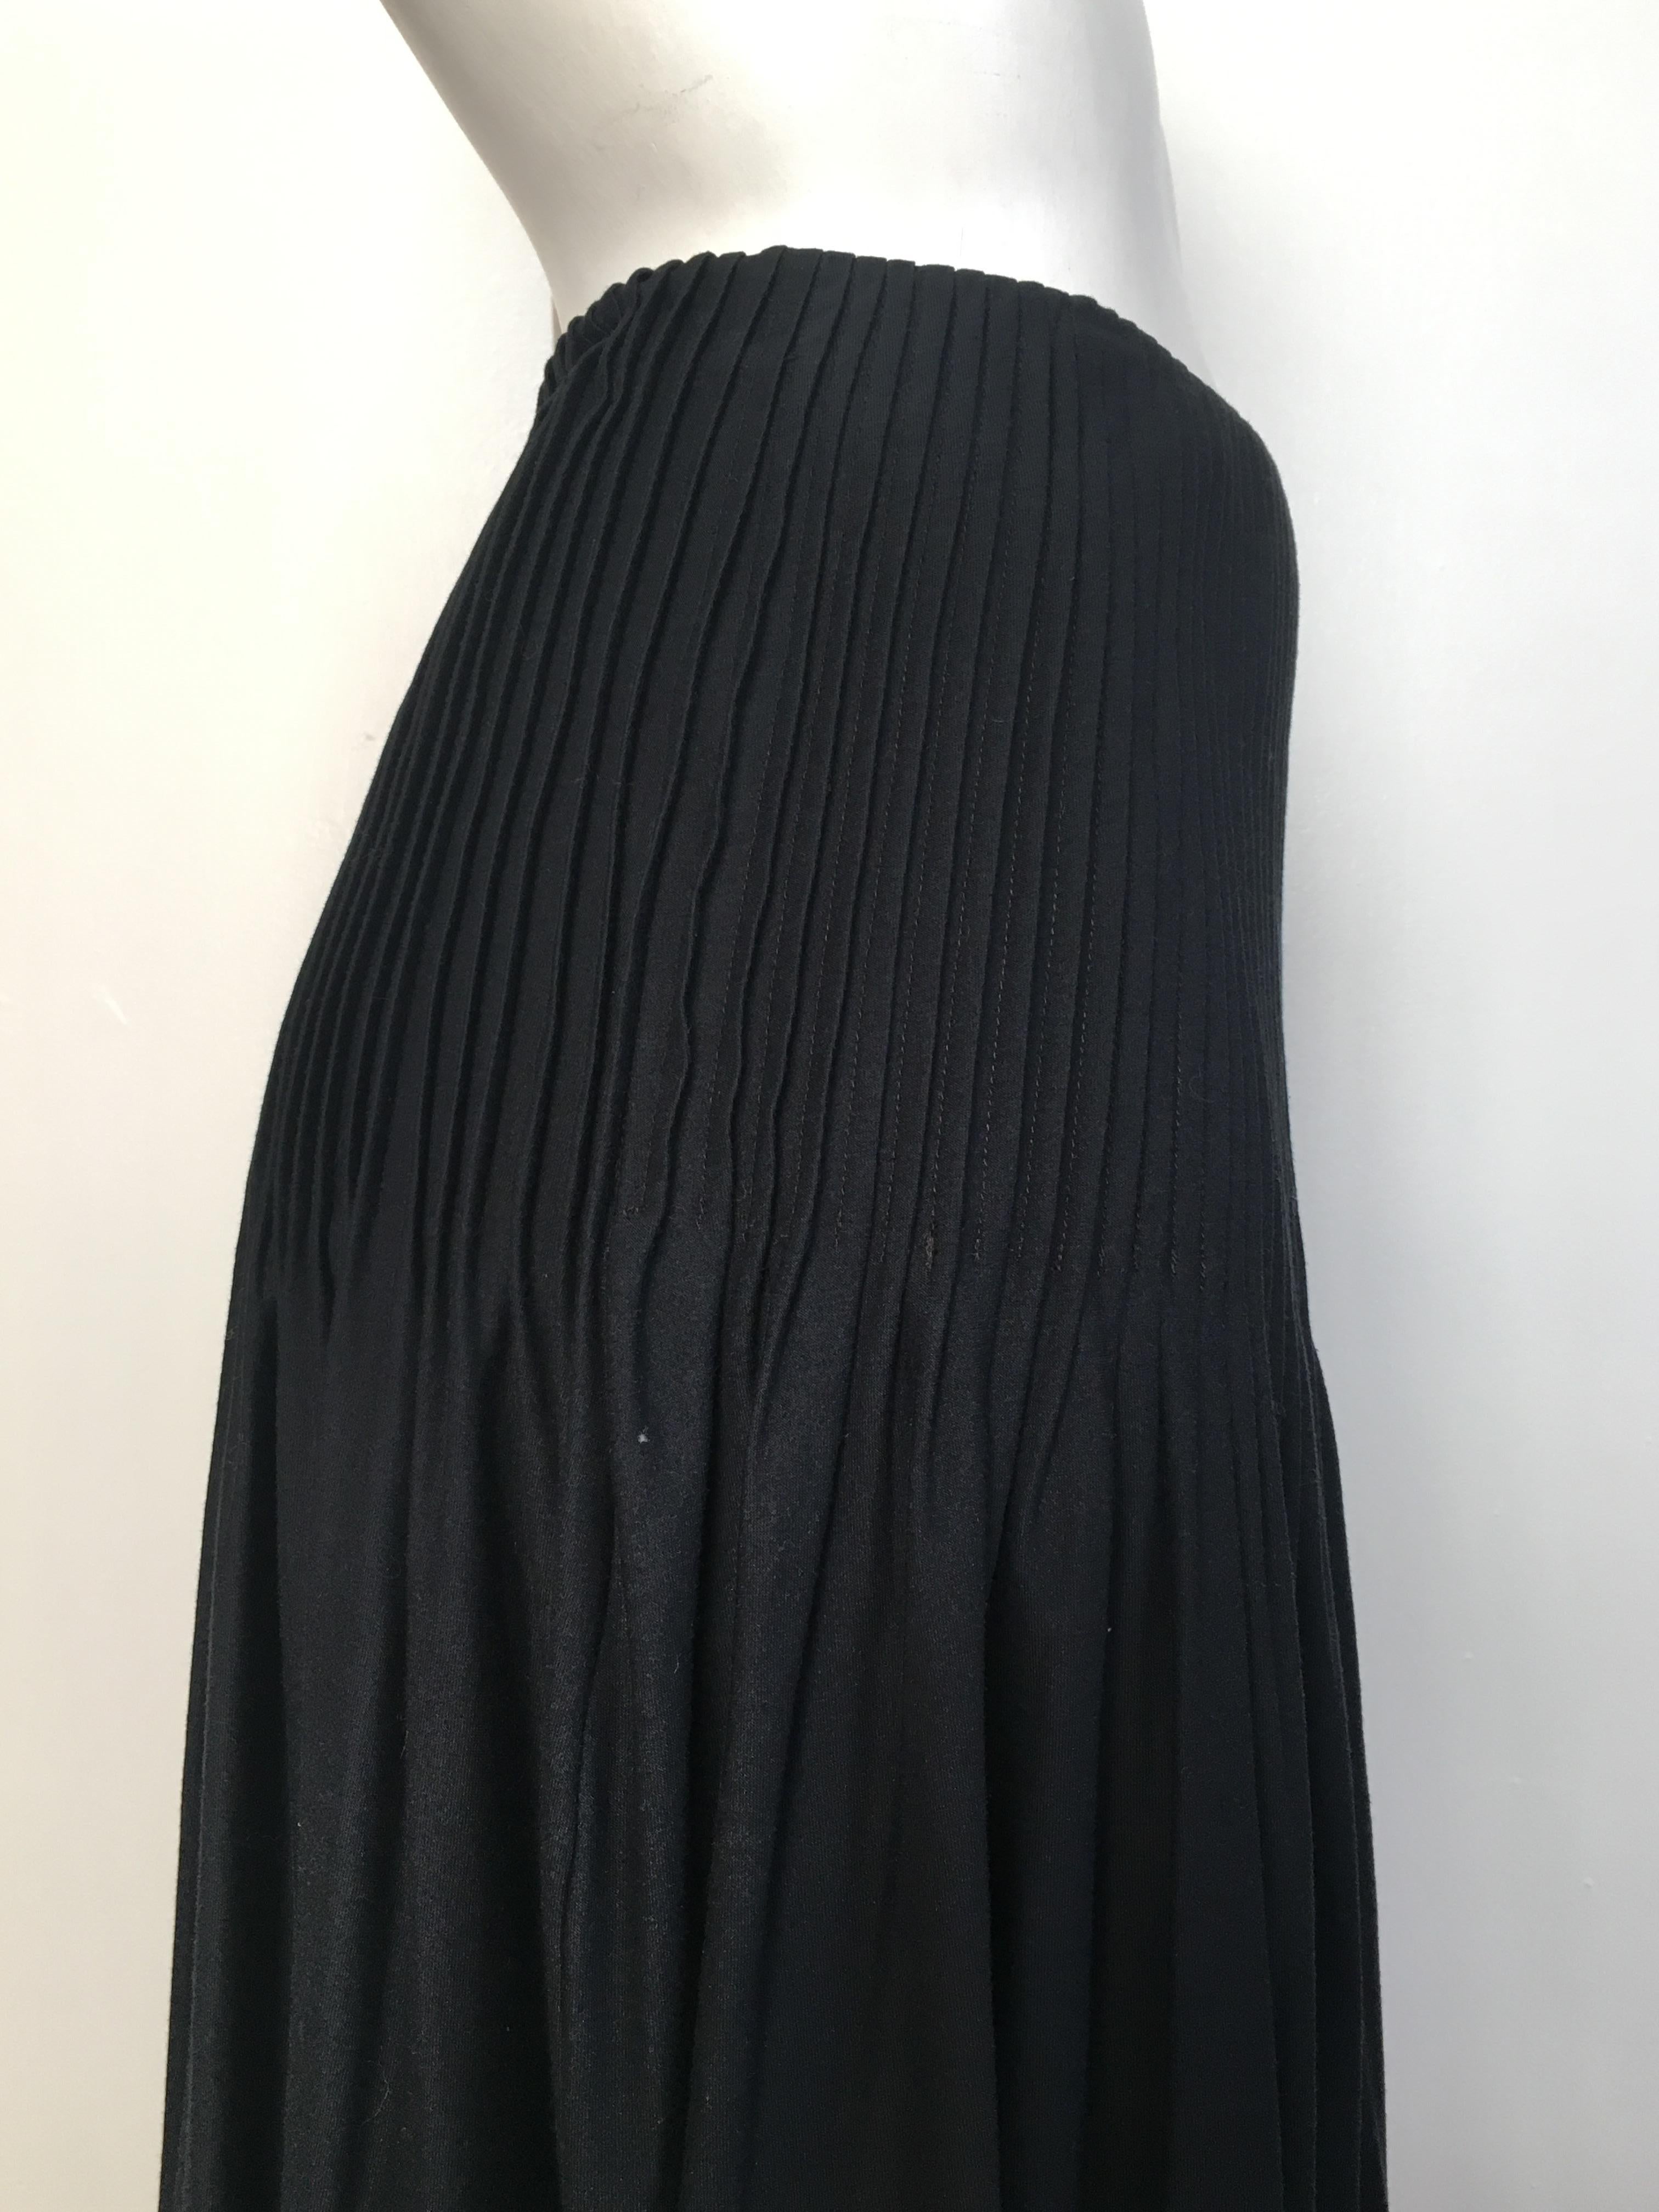 Emanuel Ungaro 1990s Silk & Cotton Pleated Black Skirt Size 10. For Sale 3